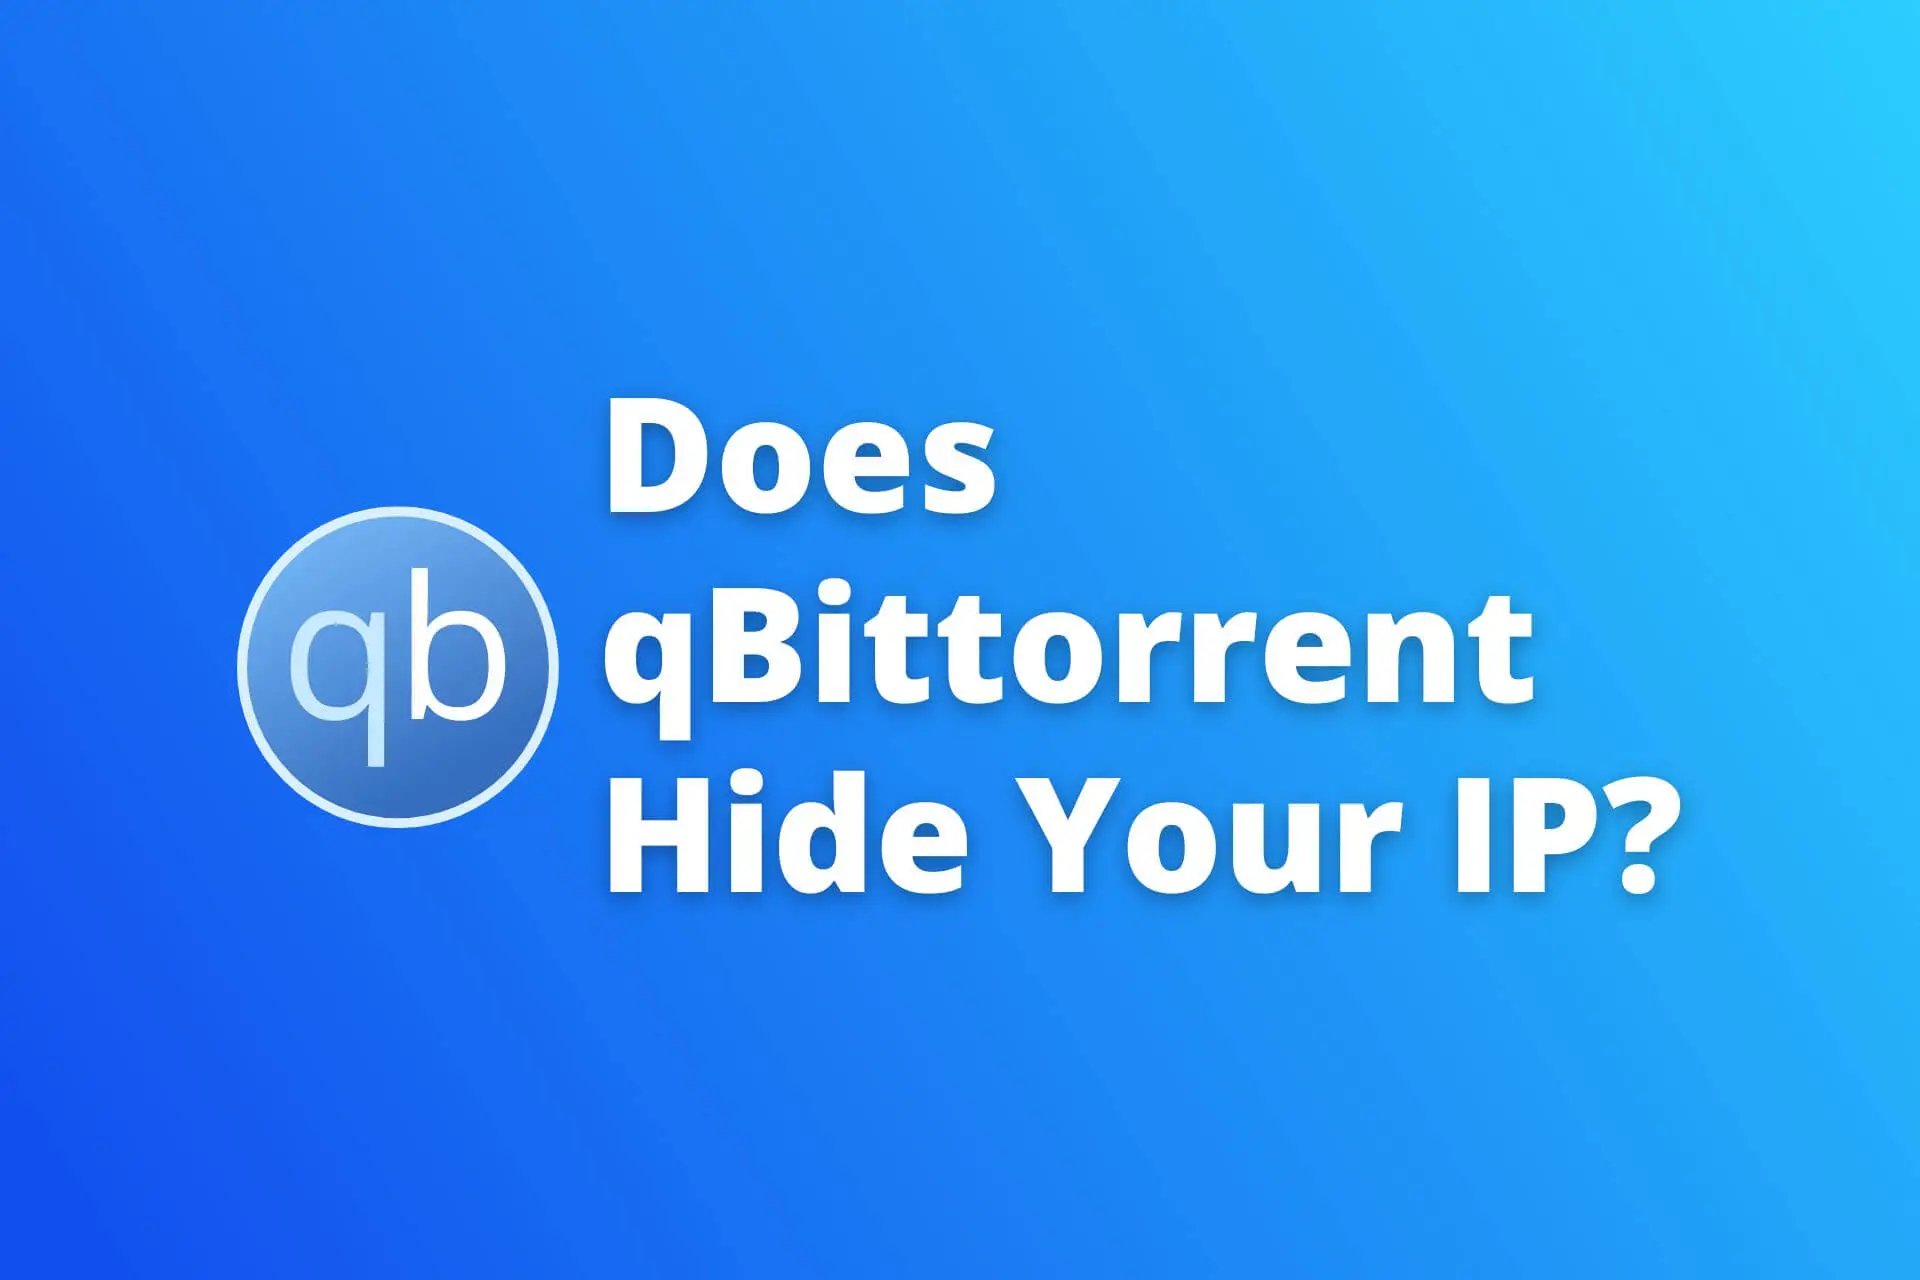 does qbittorrent hide your ip